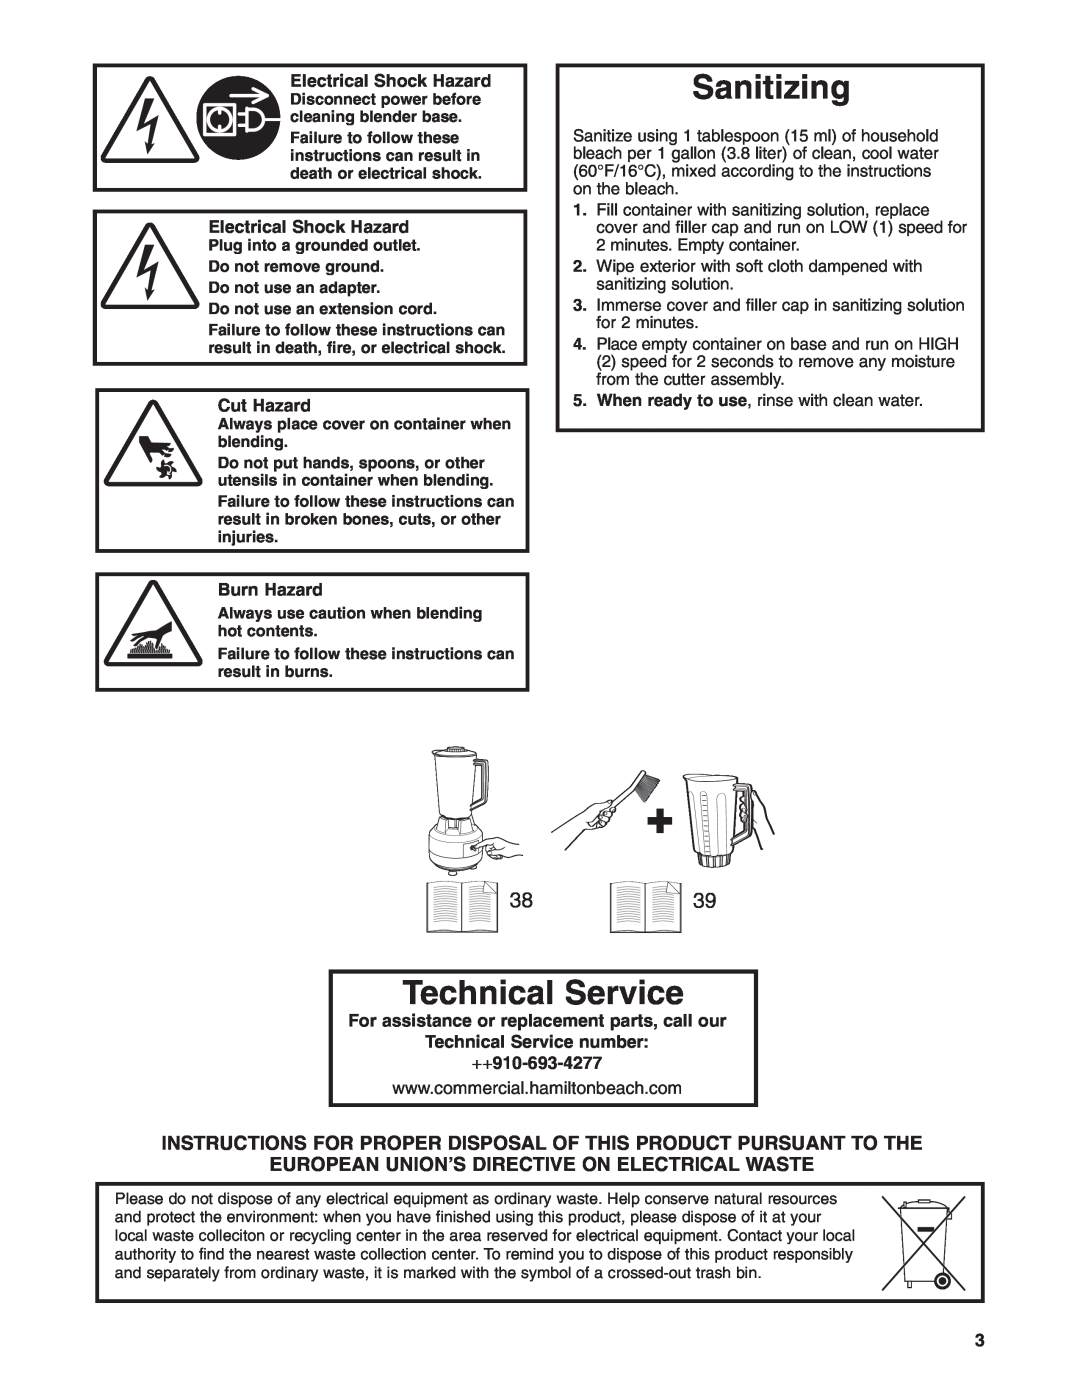 Hamilton Beach 908 Series Sanitizing, Technical Service, European Union’S Directive On Electrical Waste, Cut Hazard 